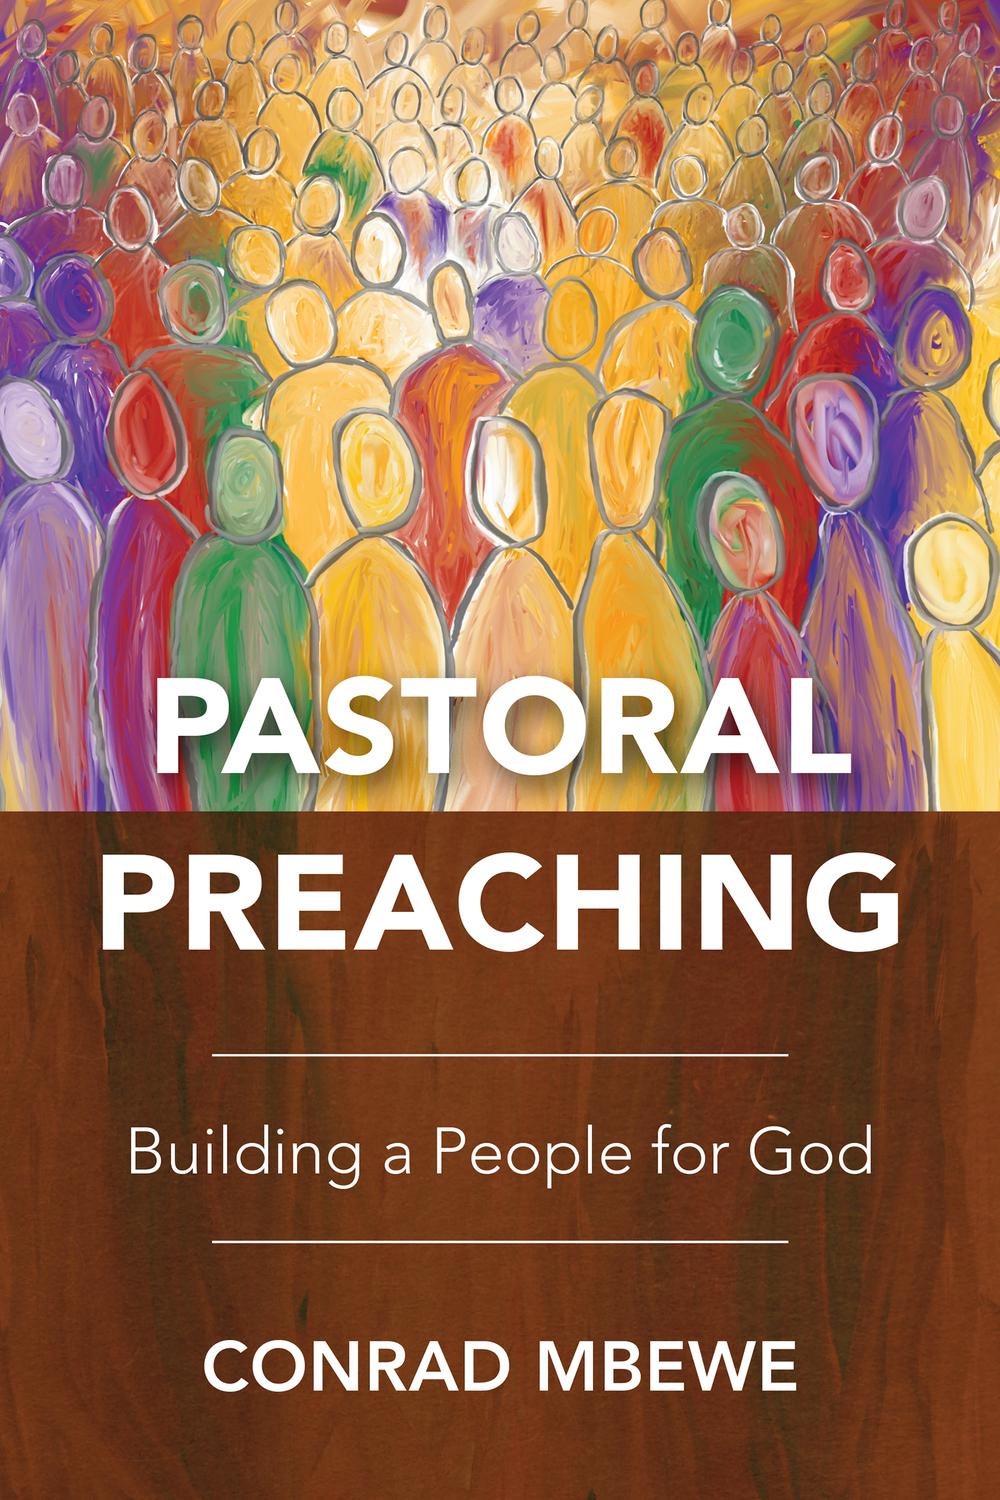 Pastoral Preaching - Conrad Mbewe